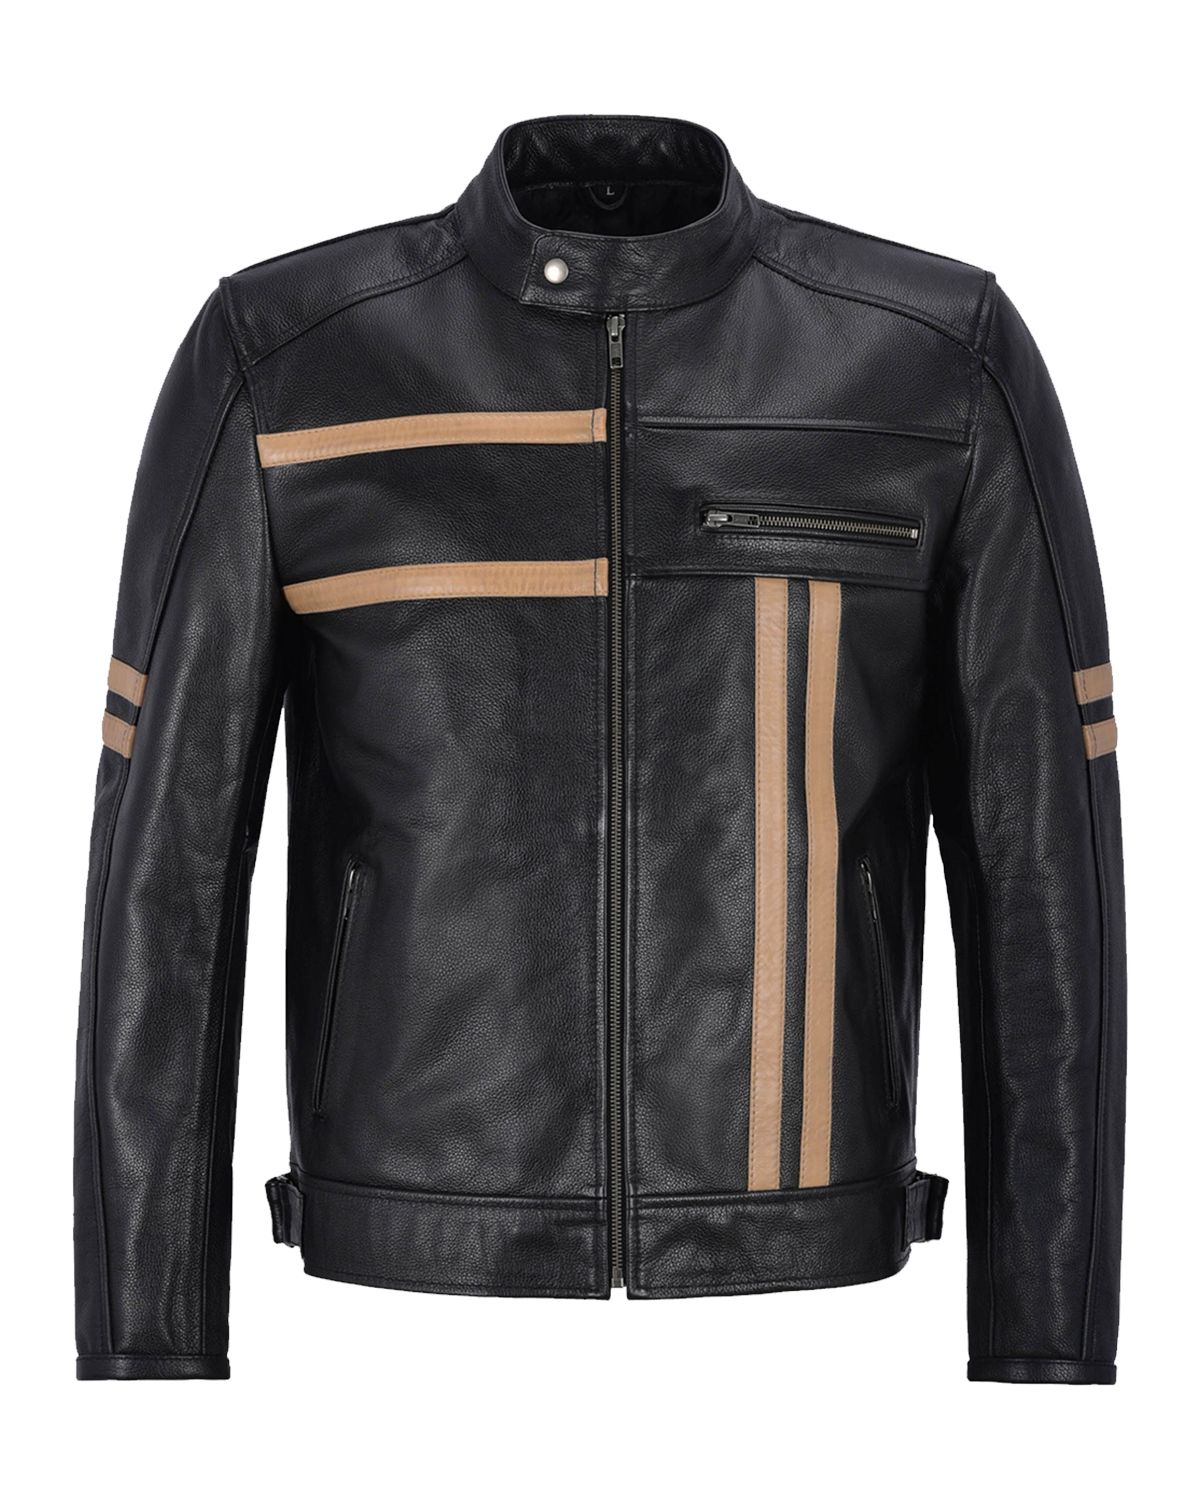 Black Beige Stripes Riding Jackets For Motorcycle | Elite Jacket